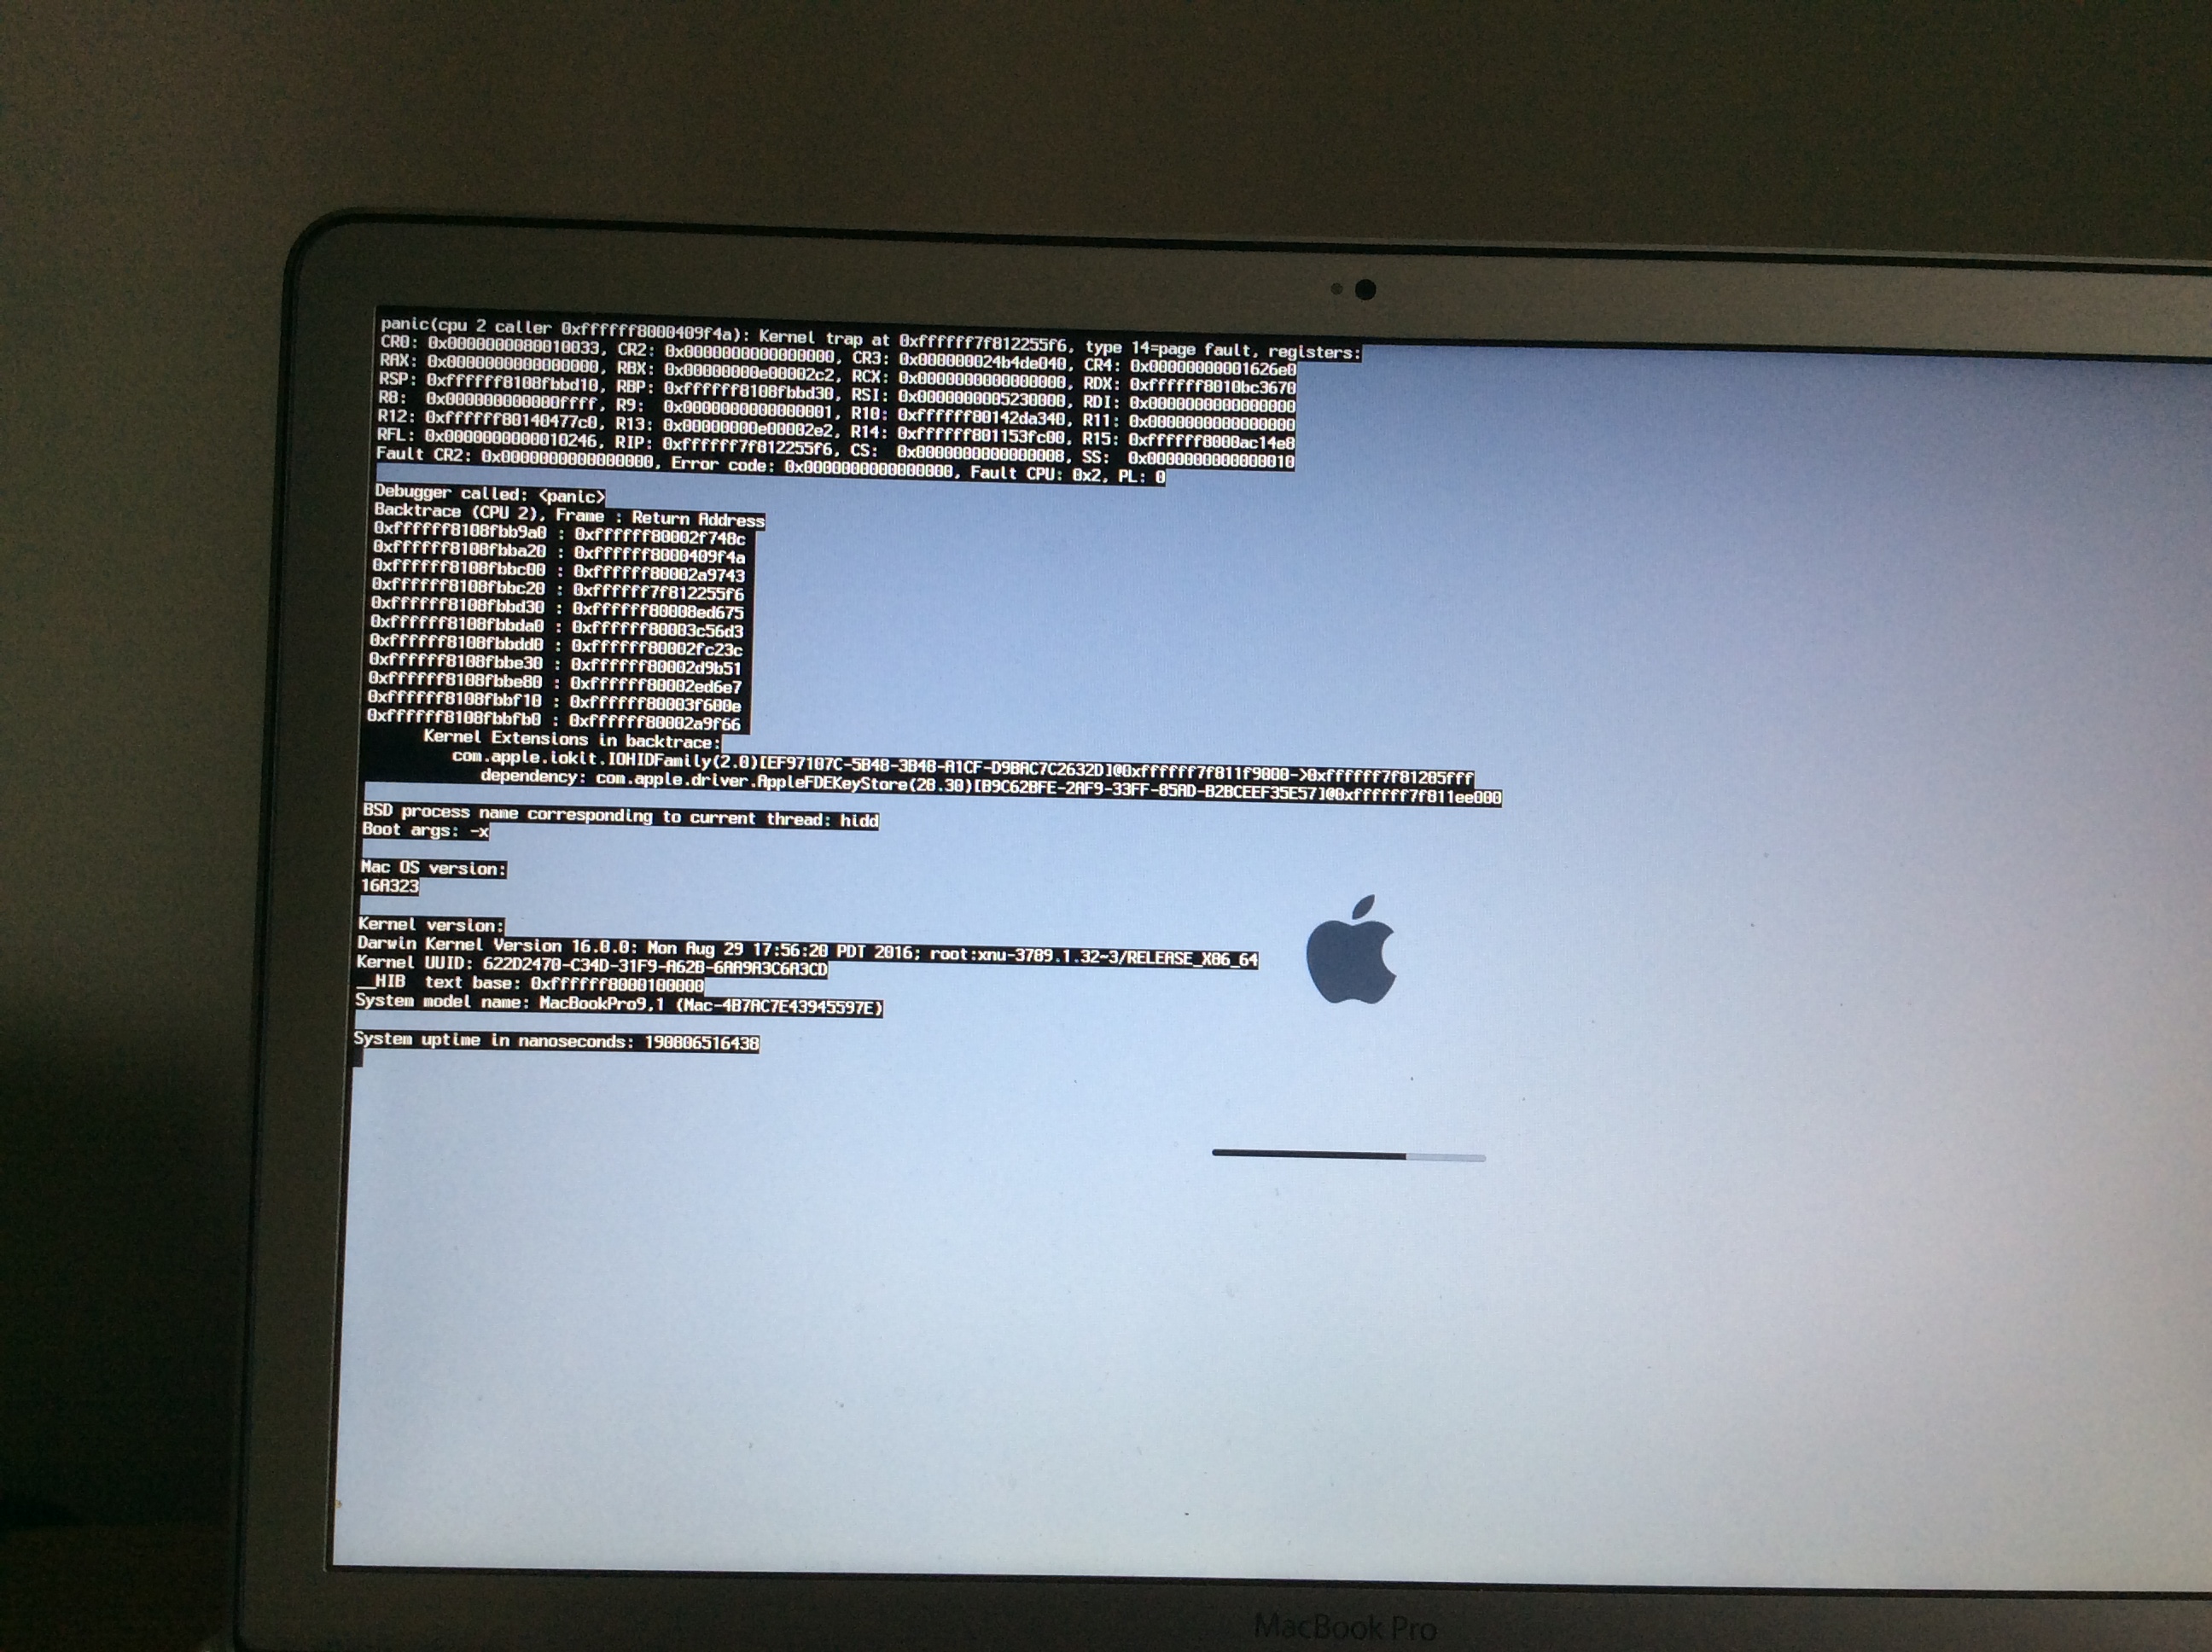 Sierra Os Update Crashes Kernel Panic Apple Community